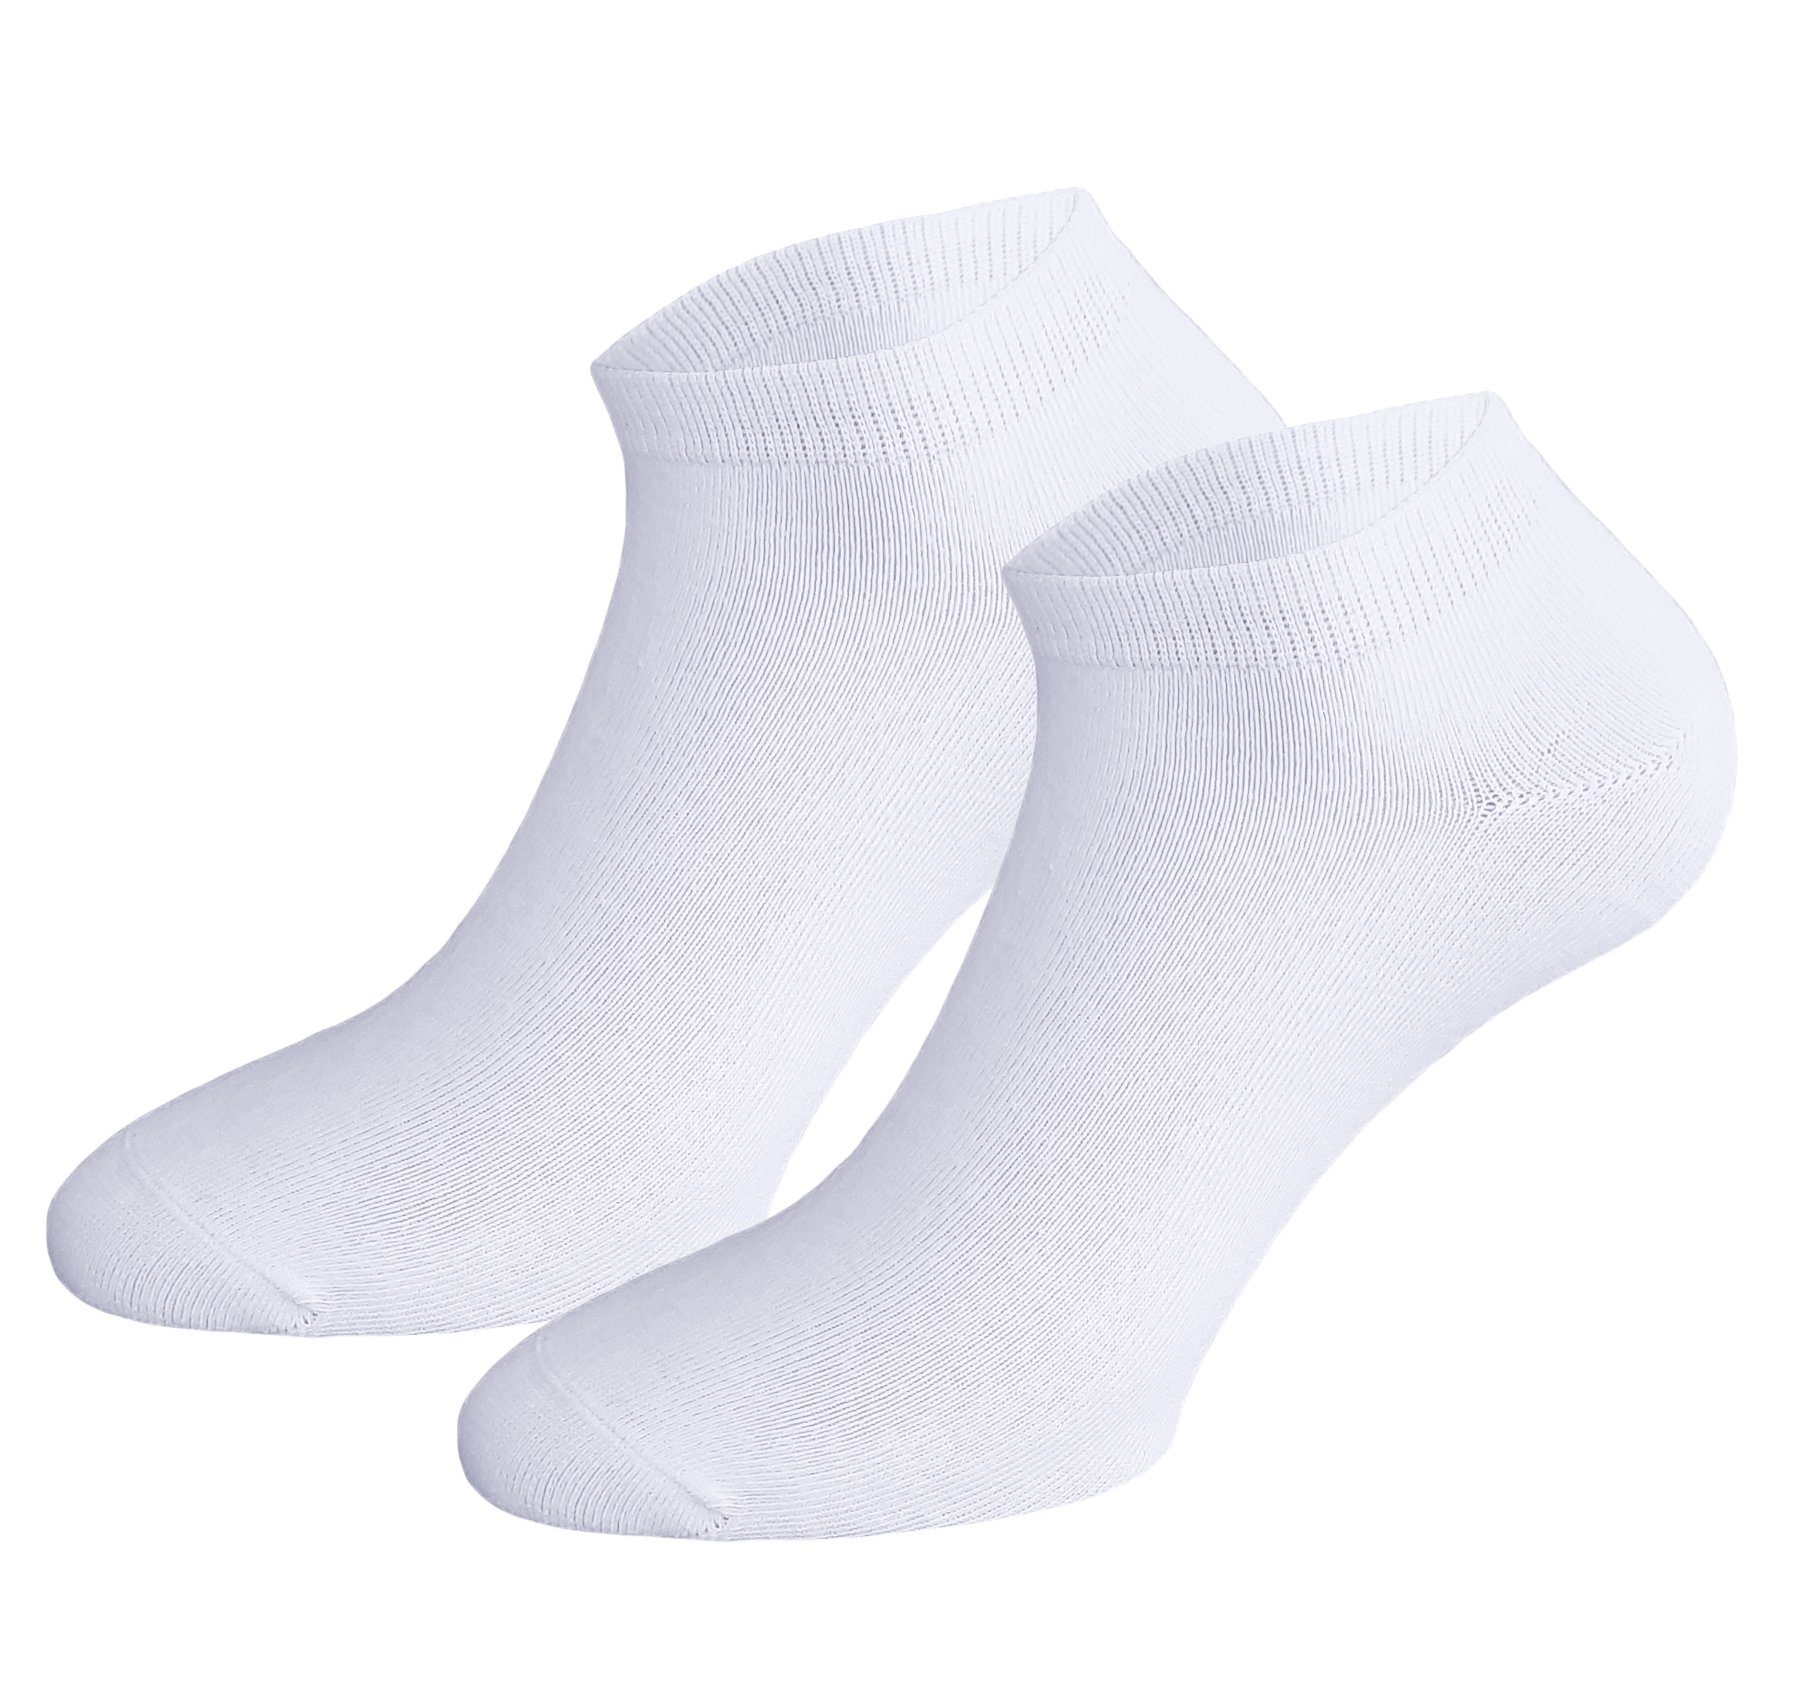 Sockenhimmel Sneakersocken Socken für Damen leichte Sommersocken kurze Sportsocken in Basic Farben (10 Paar) maschinengekettelte Naht (sehr flach) Weiß